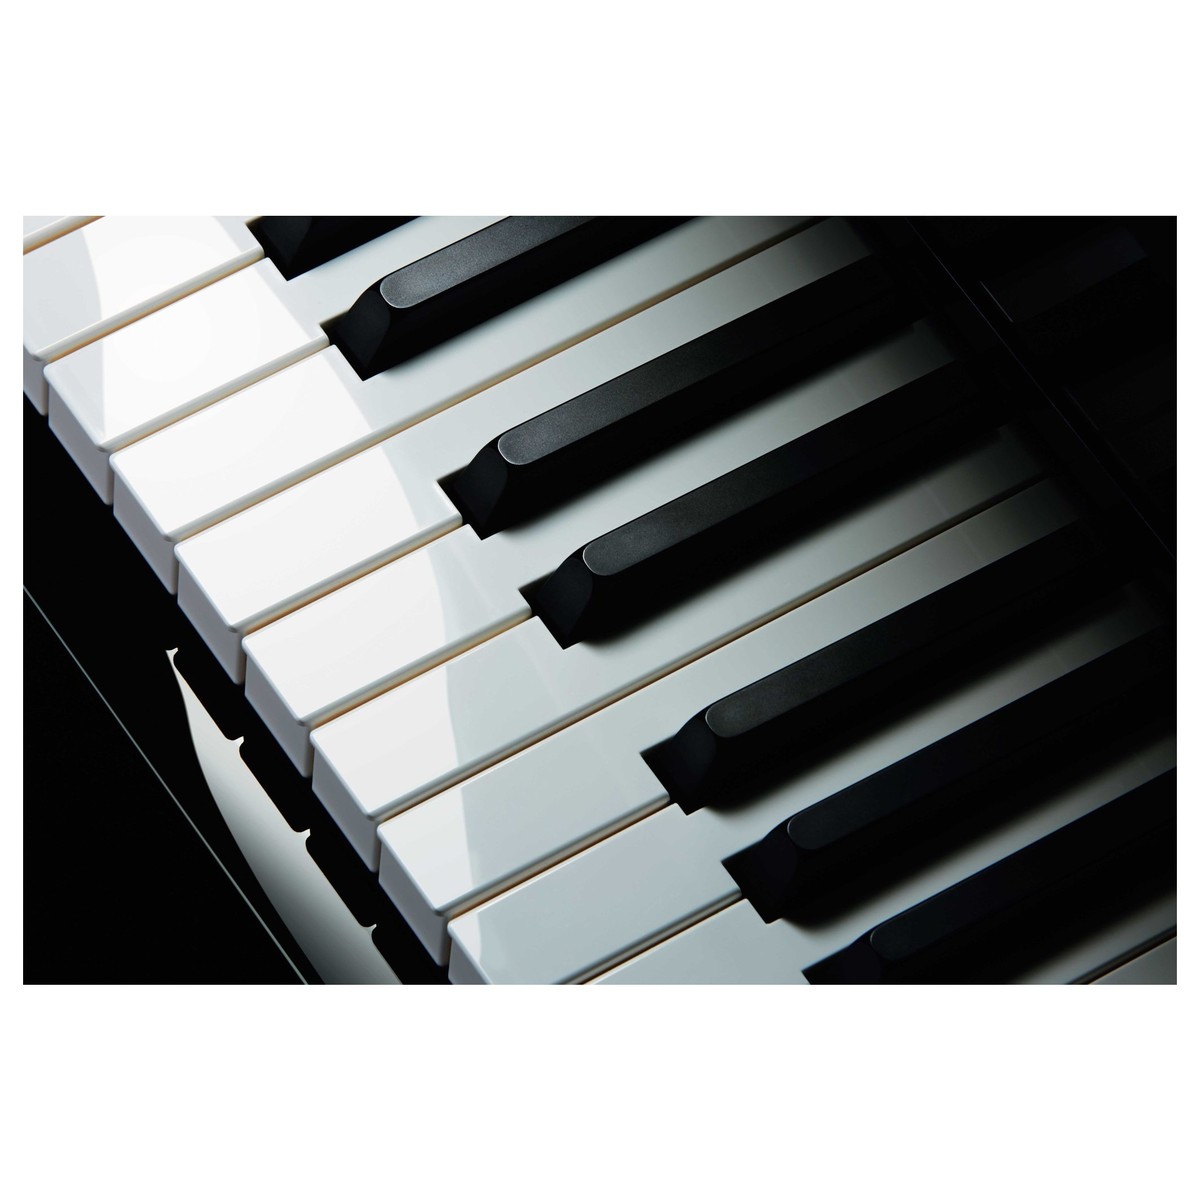 Casio GP-500 Grand Hybrid Piano ivory keys